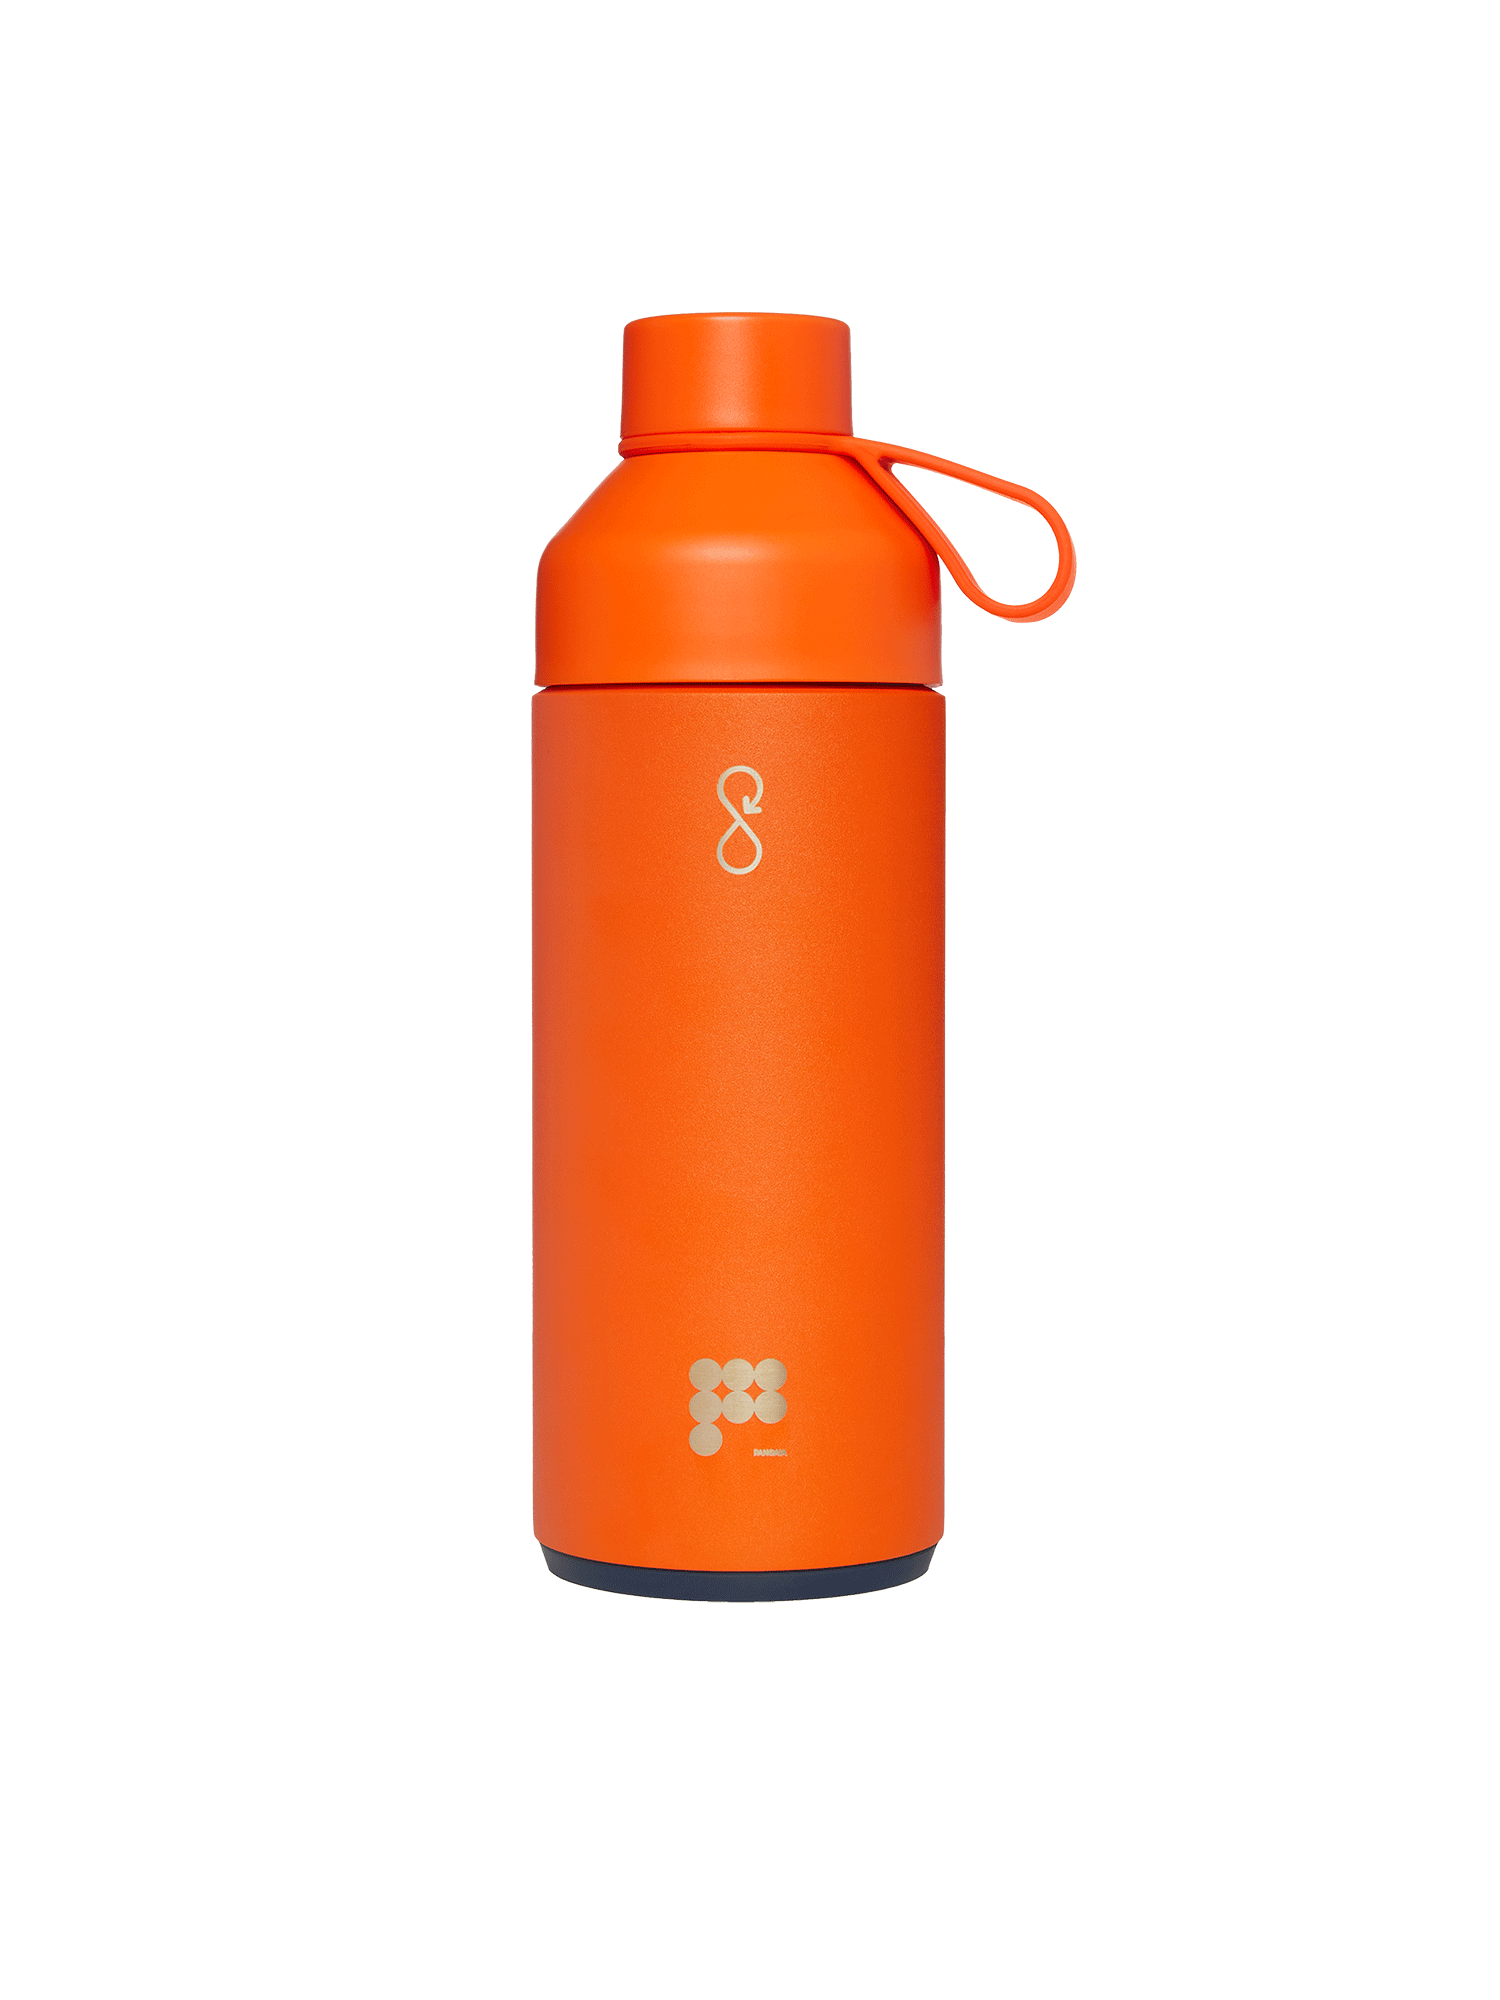 Pangaia Ocean Bottle - 1 Litre—coral orange-packshot-3